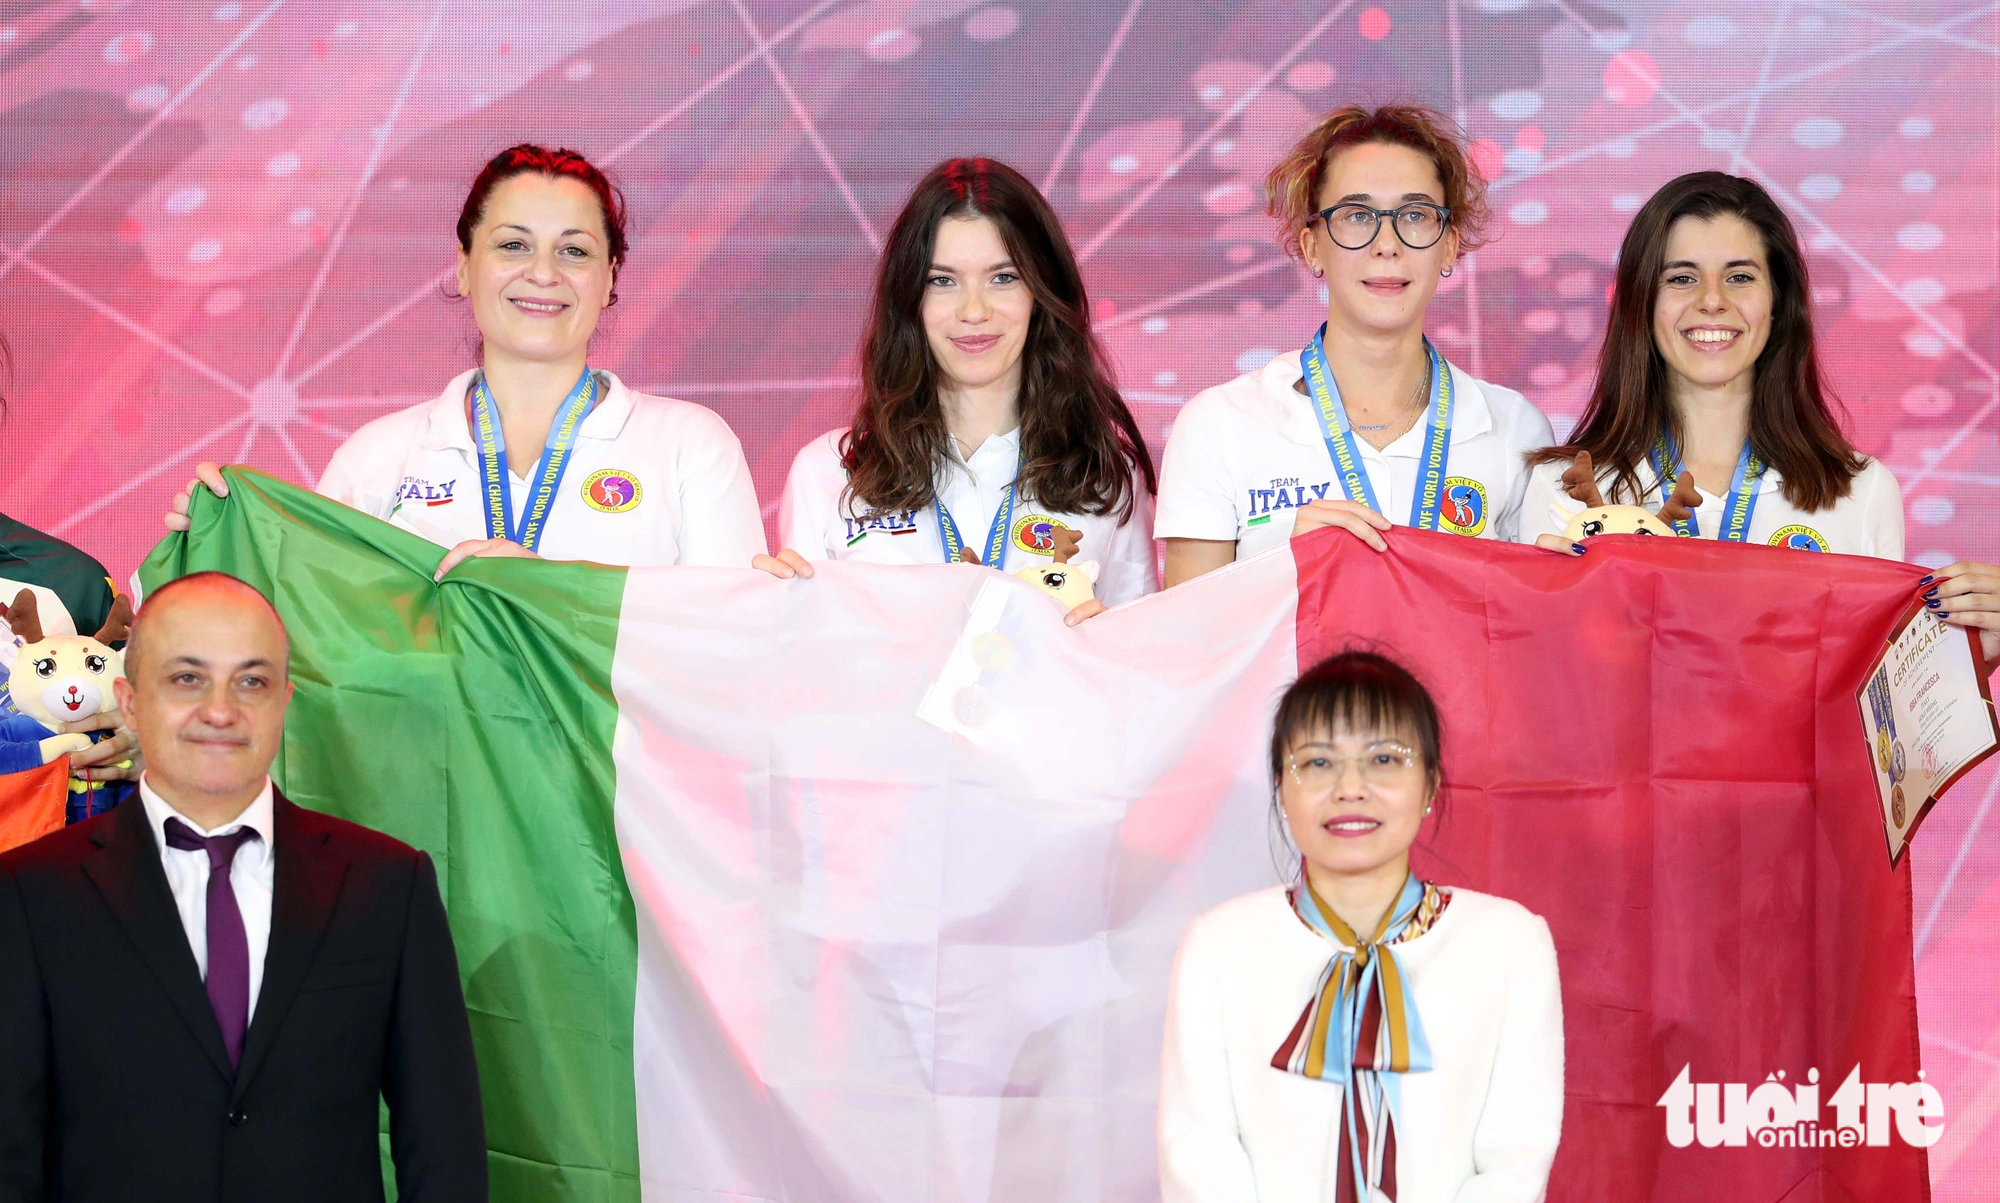 European athletes bag two gold medals at Vovinam world championship in Vietnam